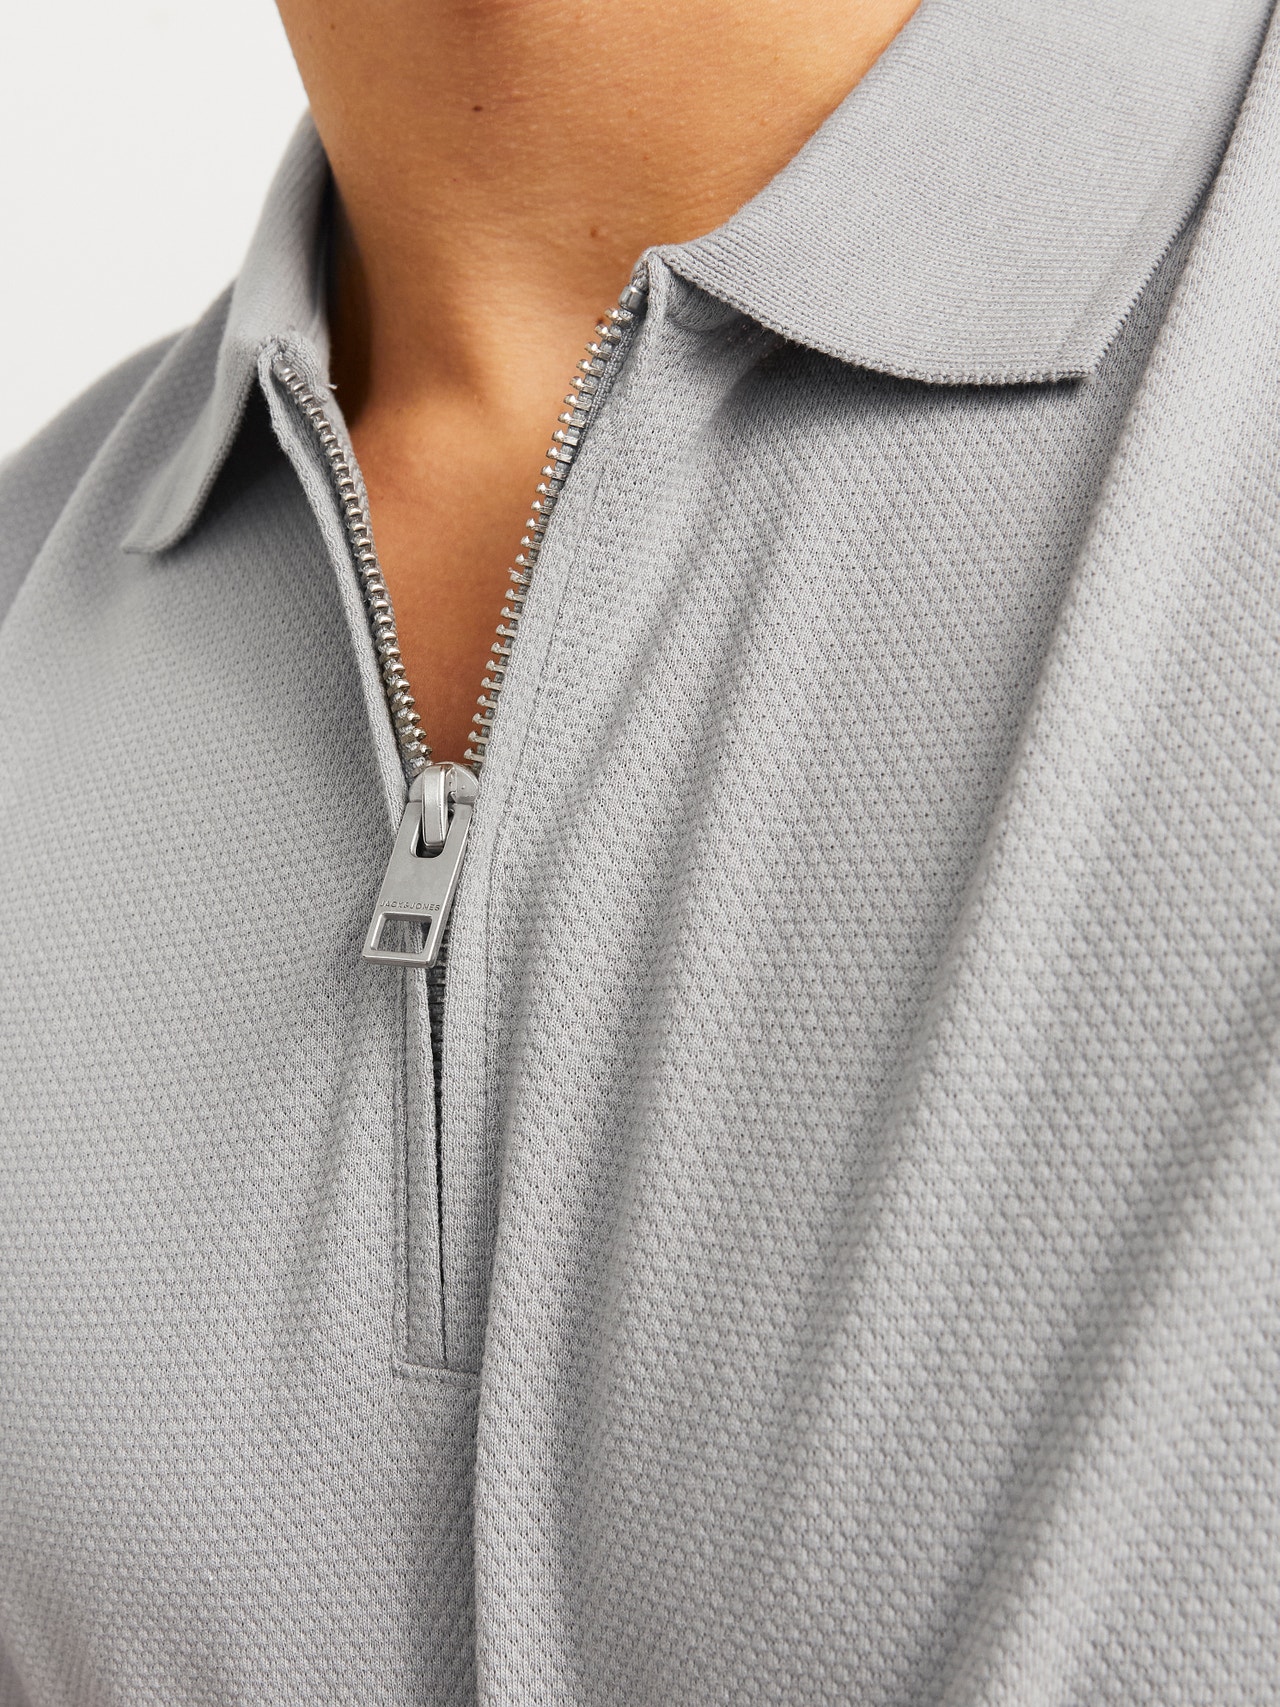 Jack & Jones Plain Polo T-shirt -Ultimate Grey - 12249324